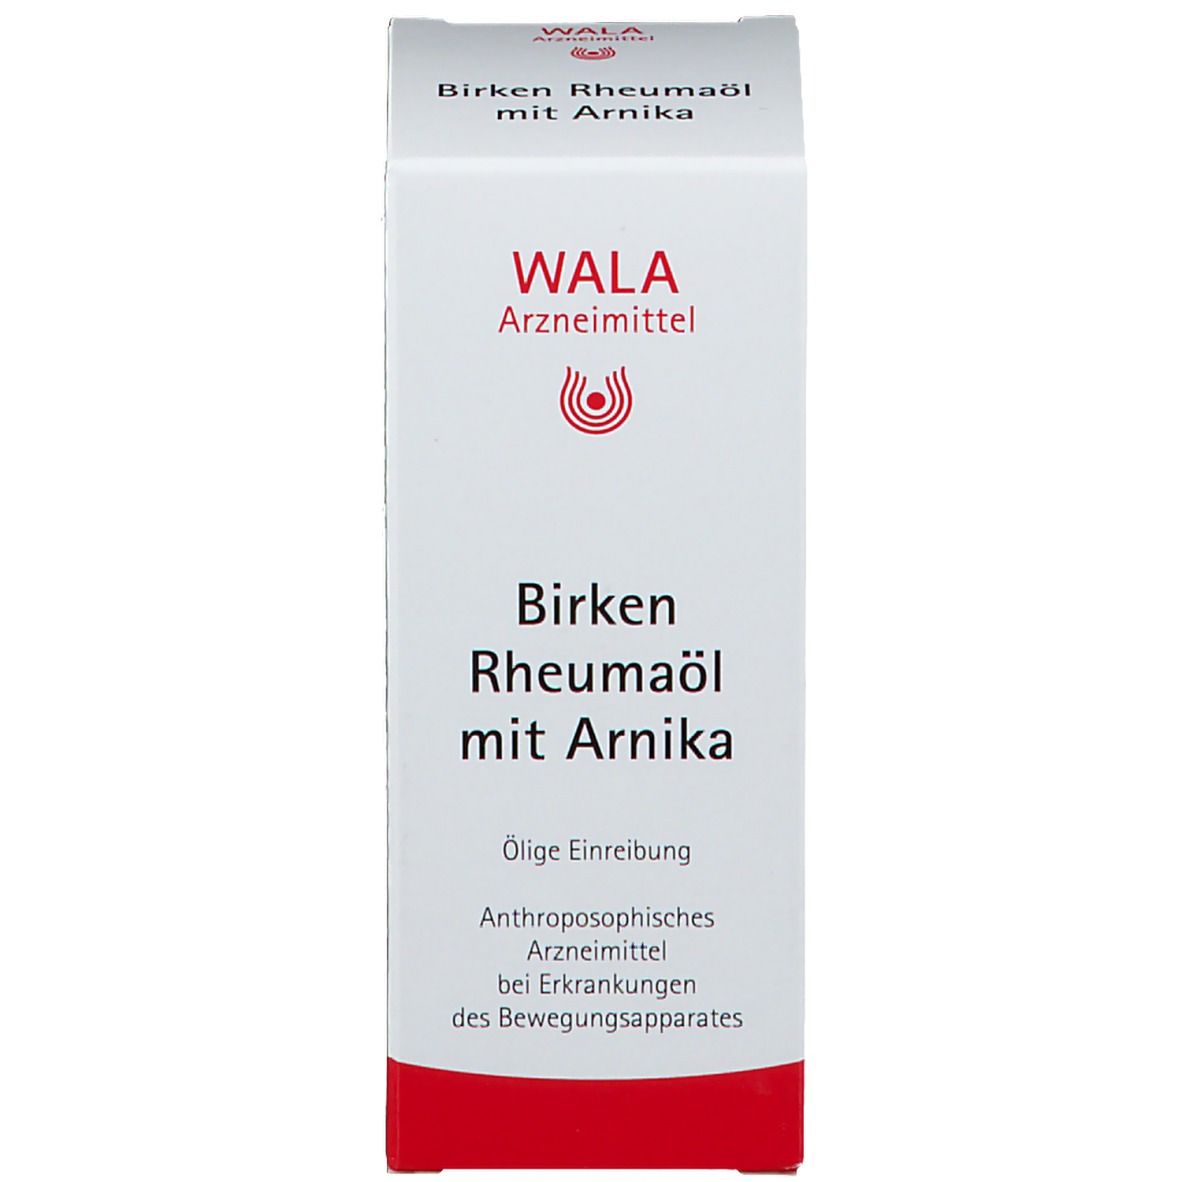 WALA® Birken Rheumaöl mit Arnika